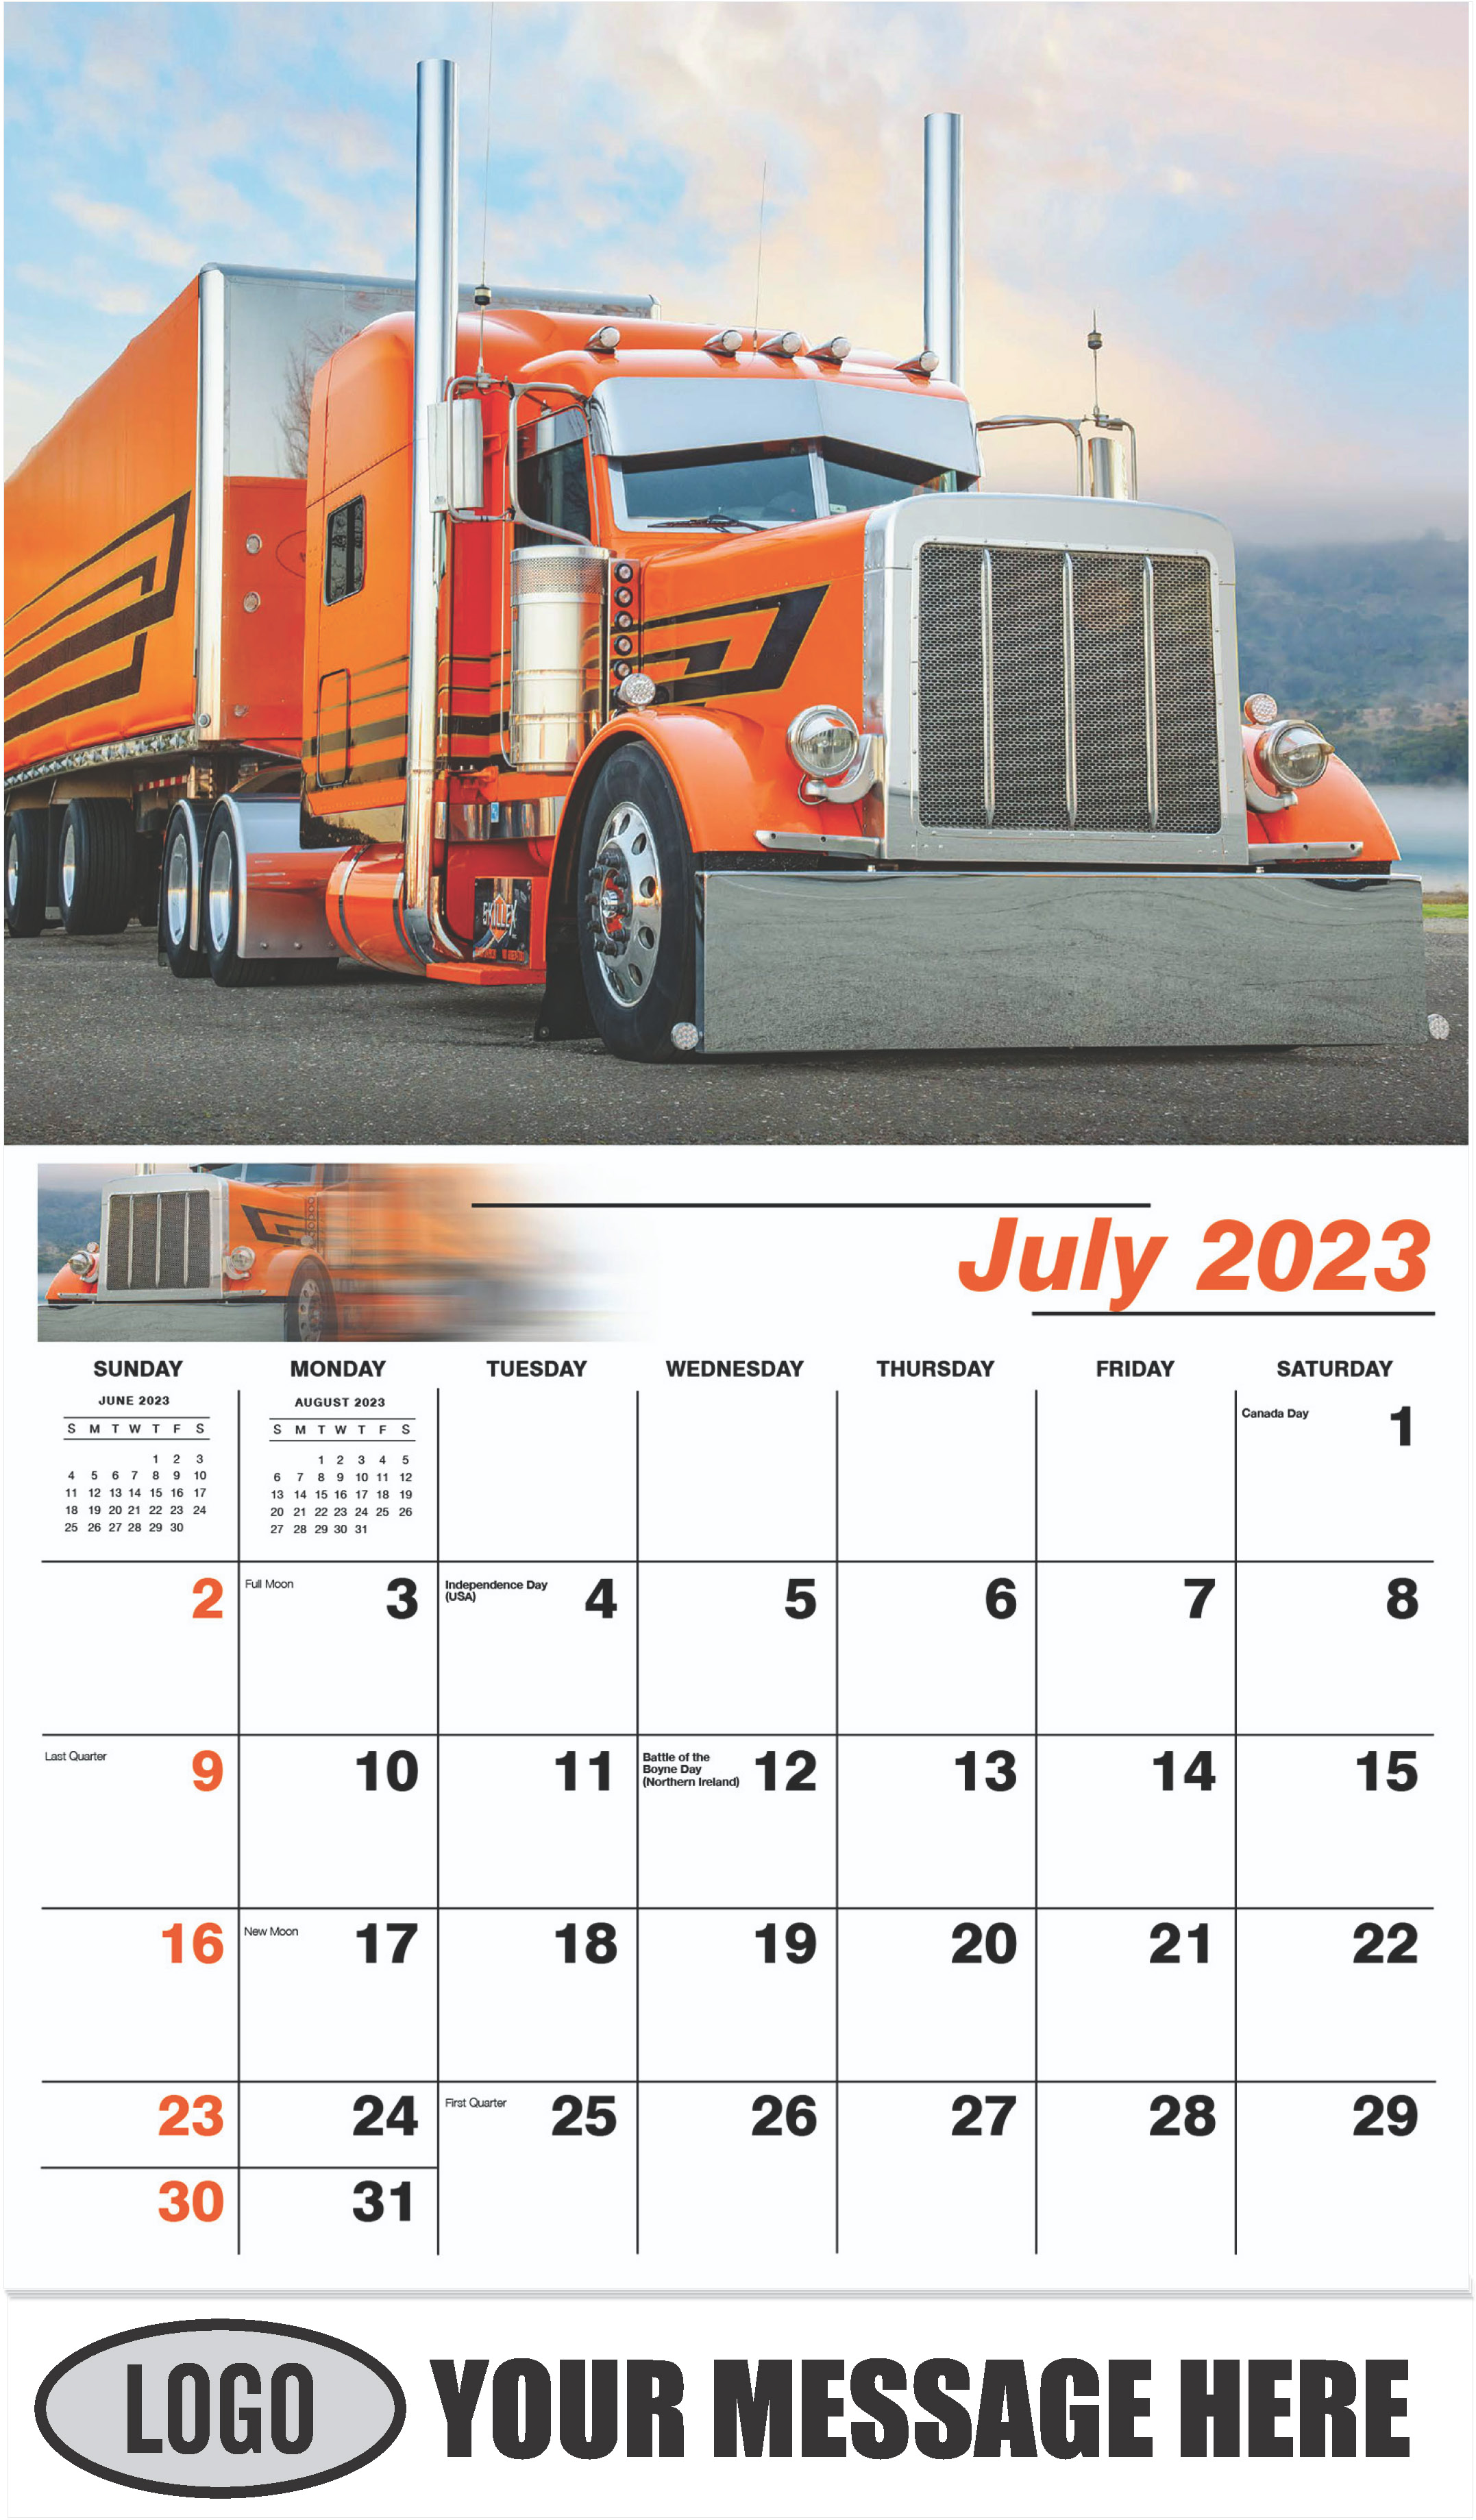 2006 Peterbilt 379 - July - Kings of the Road 2023 Promotional Calendar